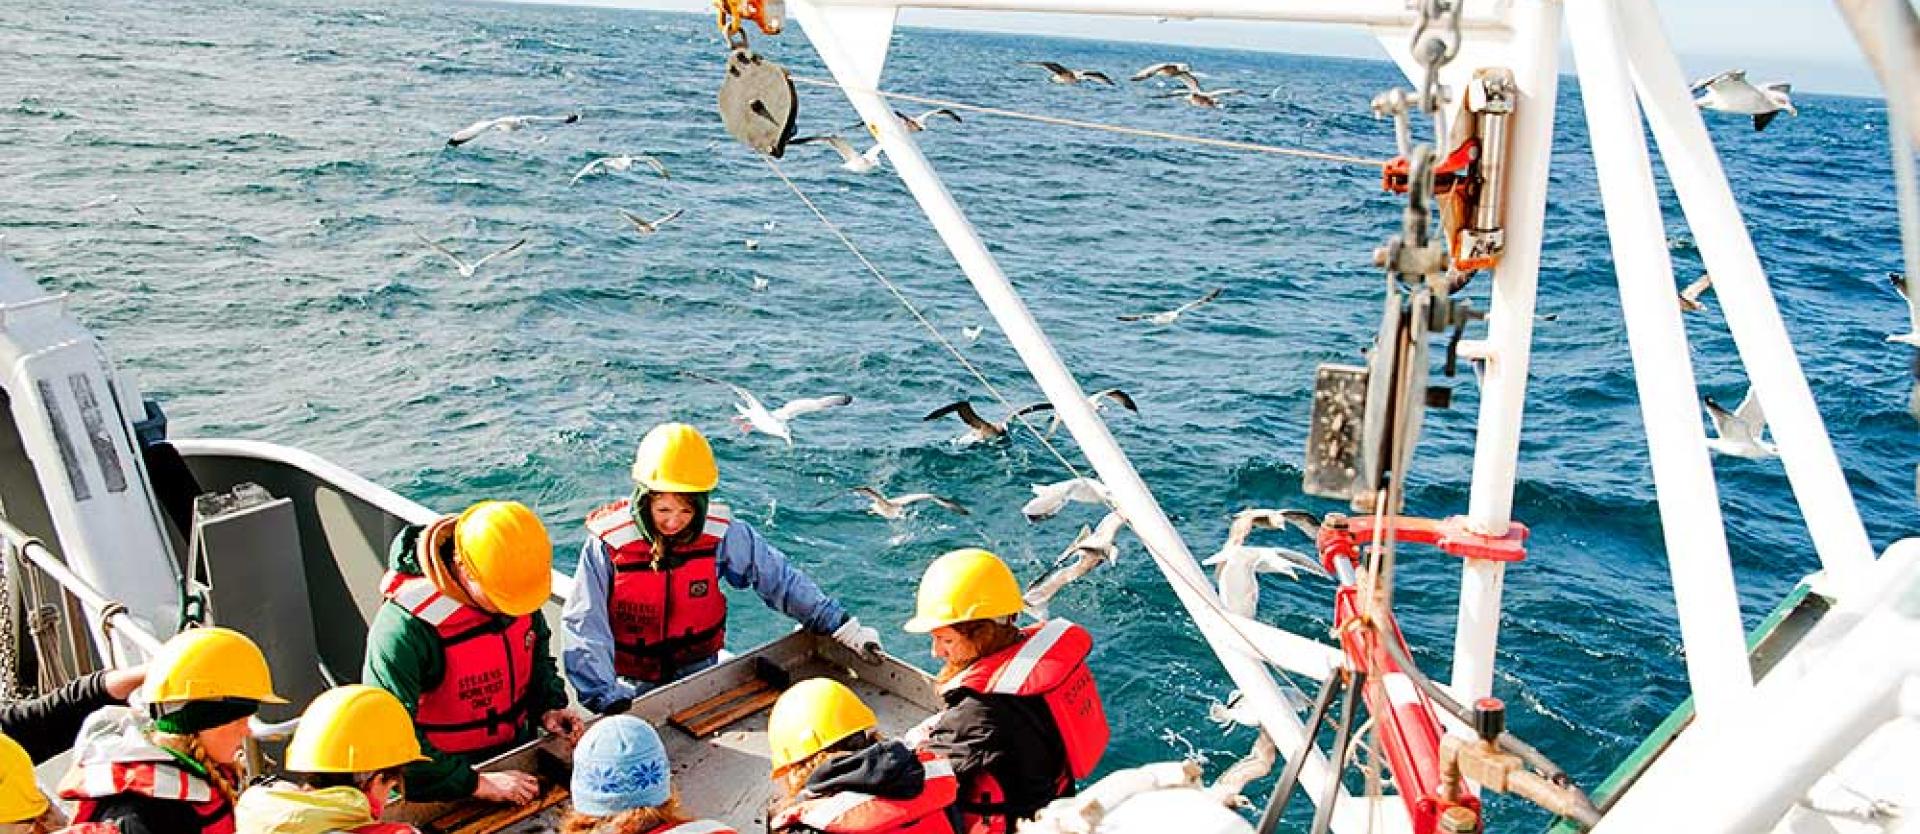 Undergraduate research aboard the Coral Sea, Humboldt's 90-foot research vessel